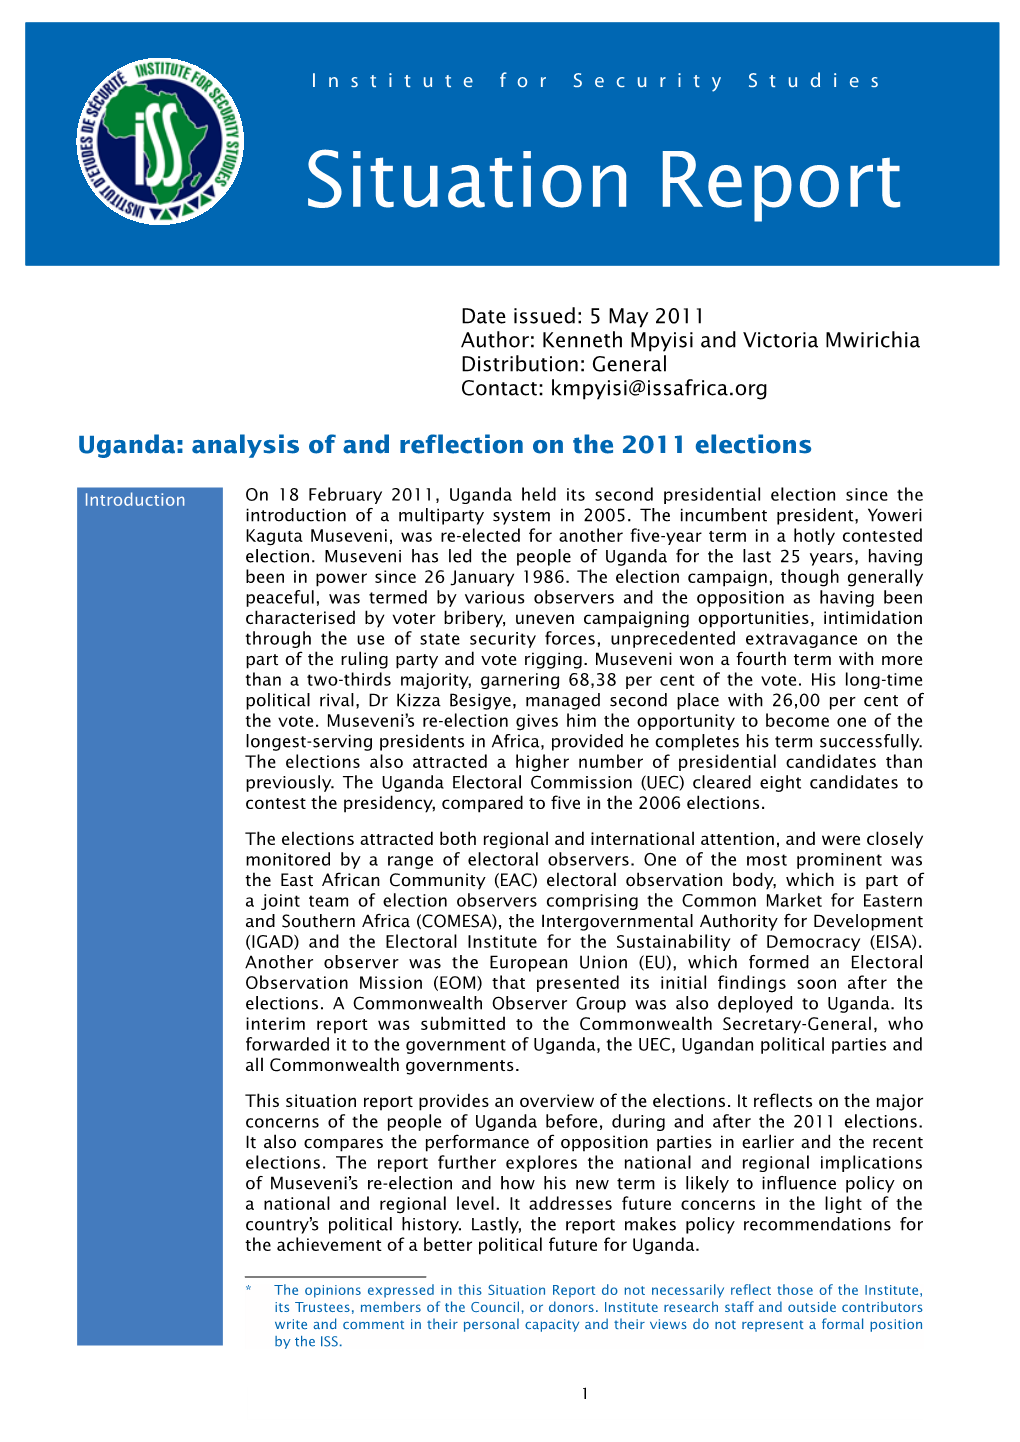 Uganda: Analysis of and Reflection on the 2011 Elections